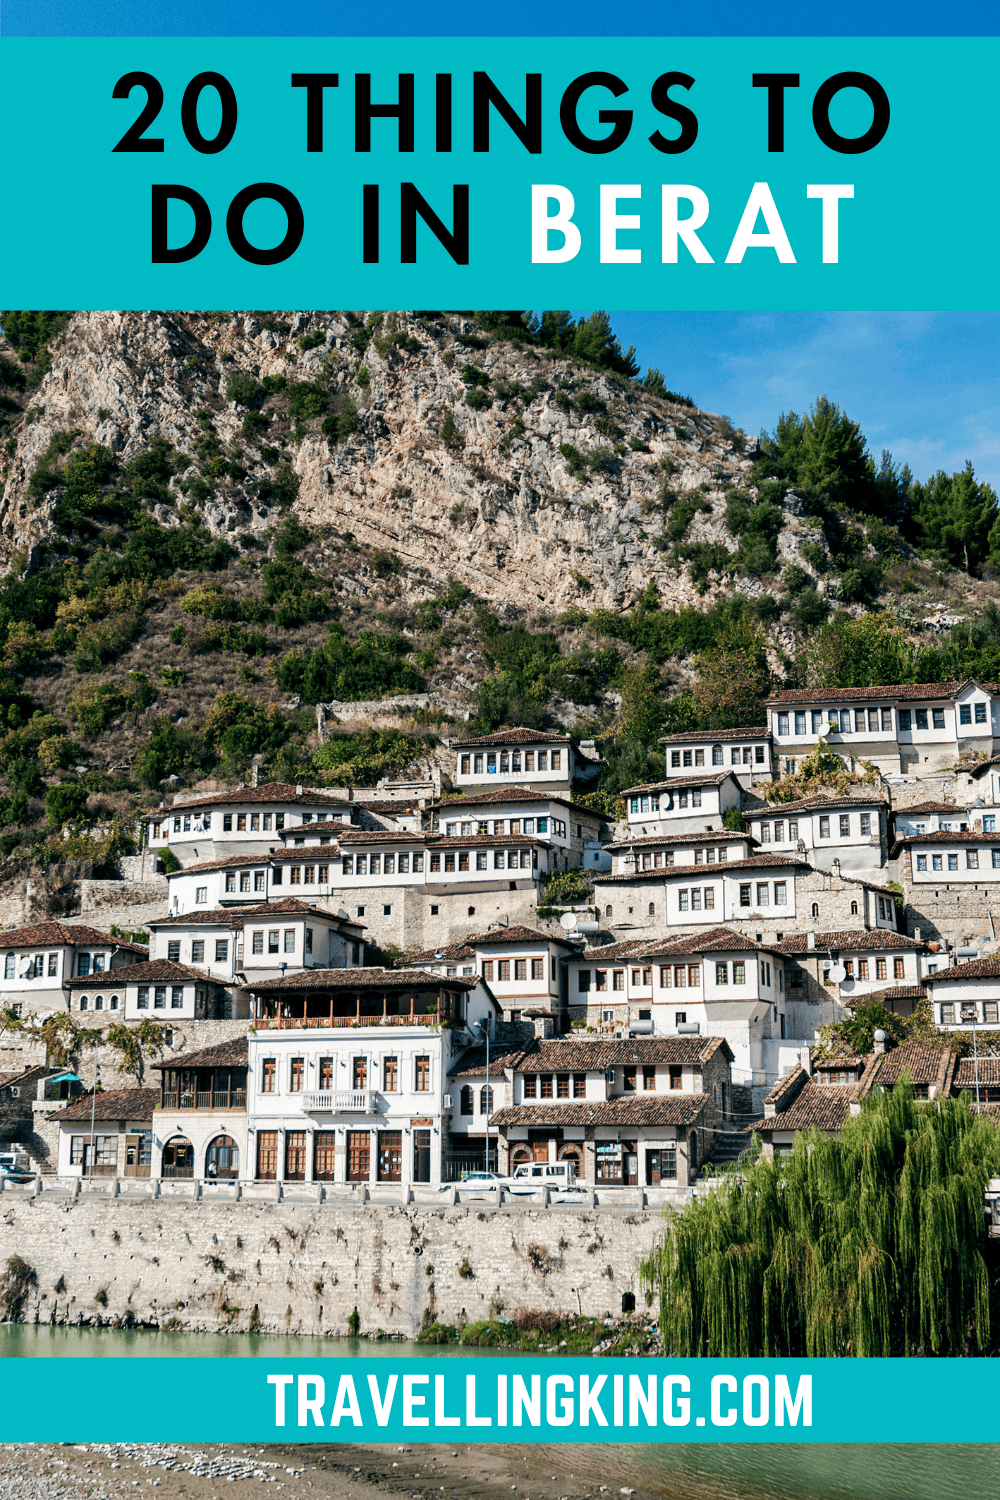 20 Things To Do in Berat